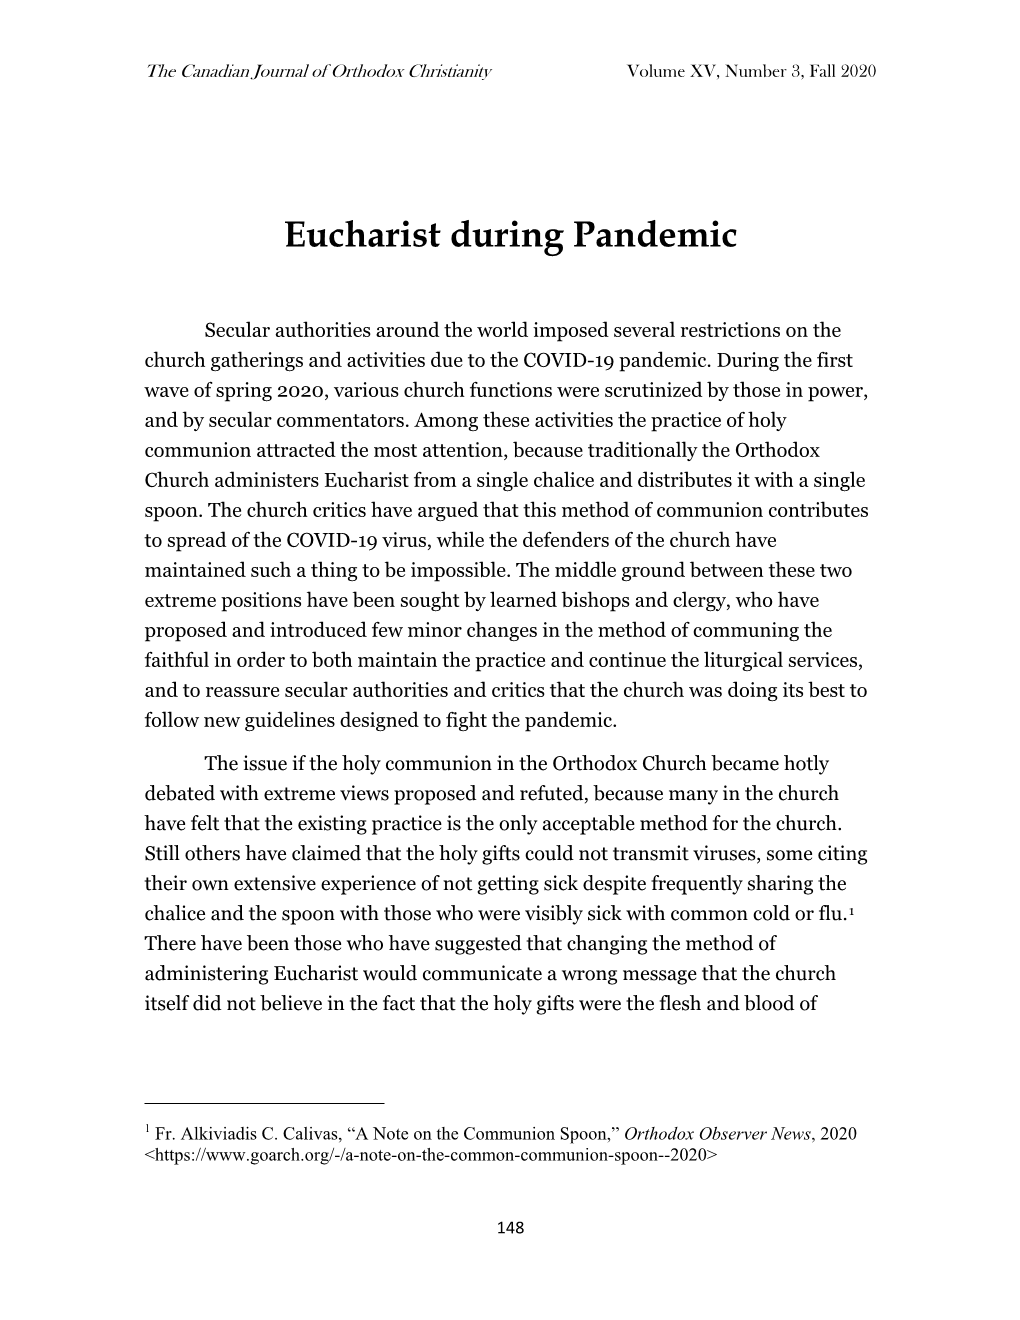 Eucharist During Pandemic